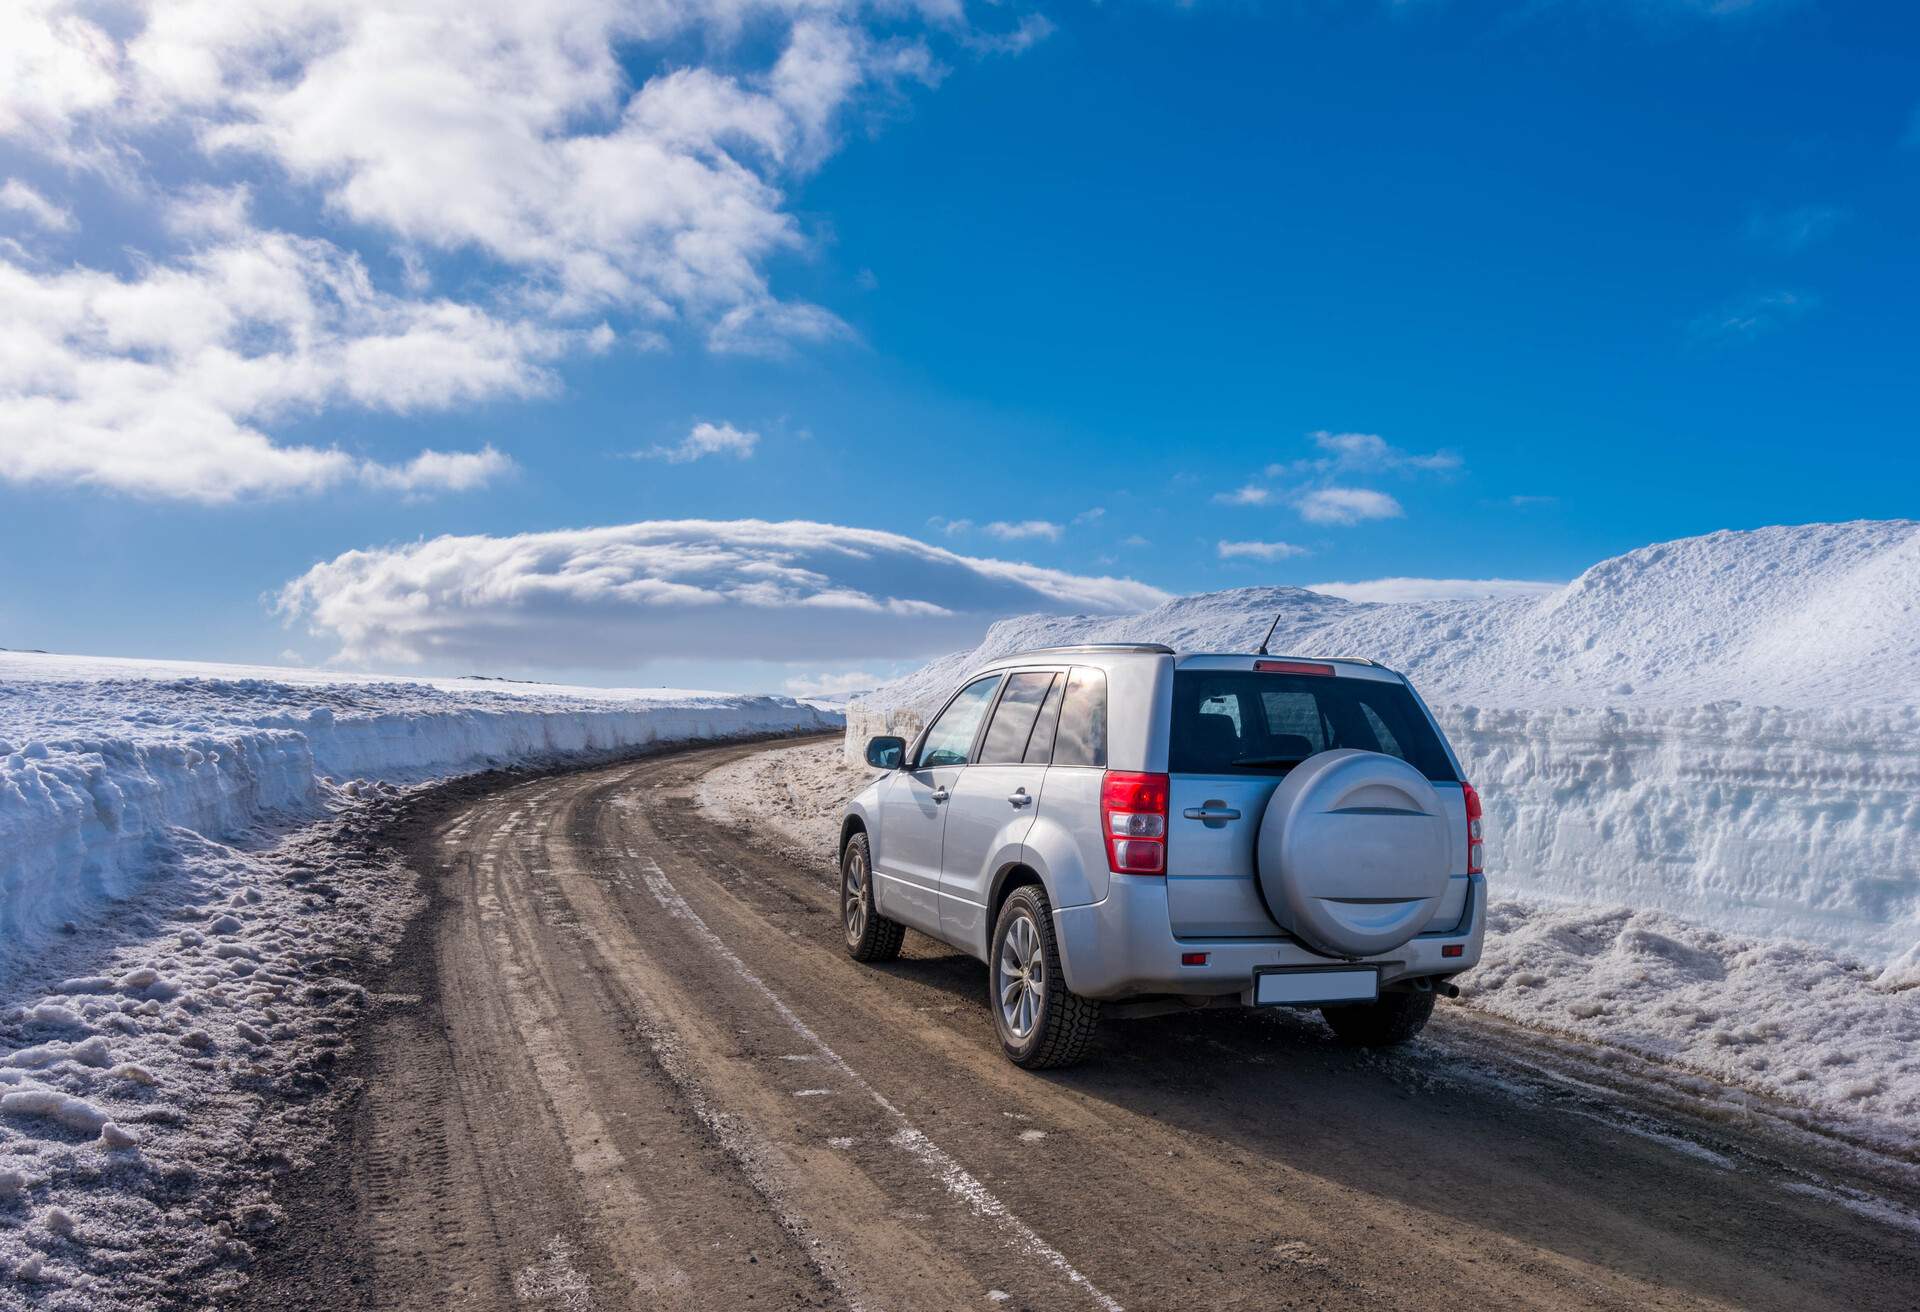 DEST_ICELAND_REYKJAVIK_THEME_CAR_DRIVING_SNOW-shutterstock-portfolio_704630515